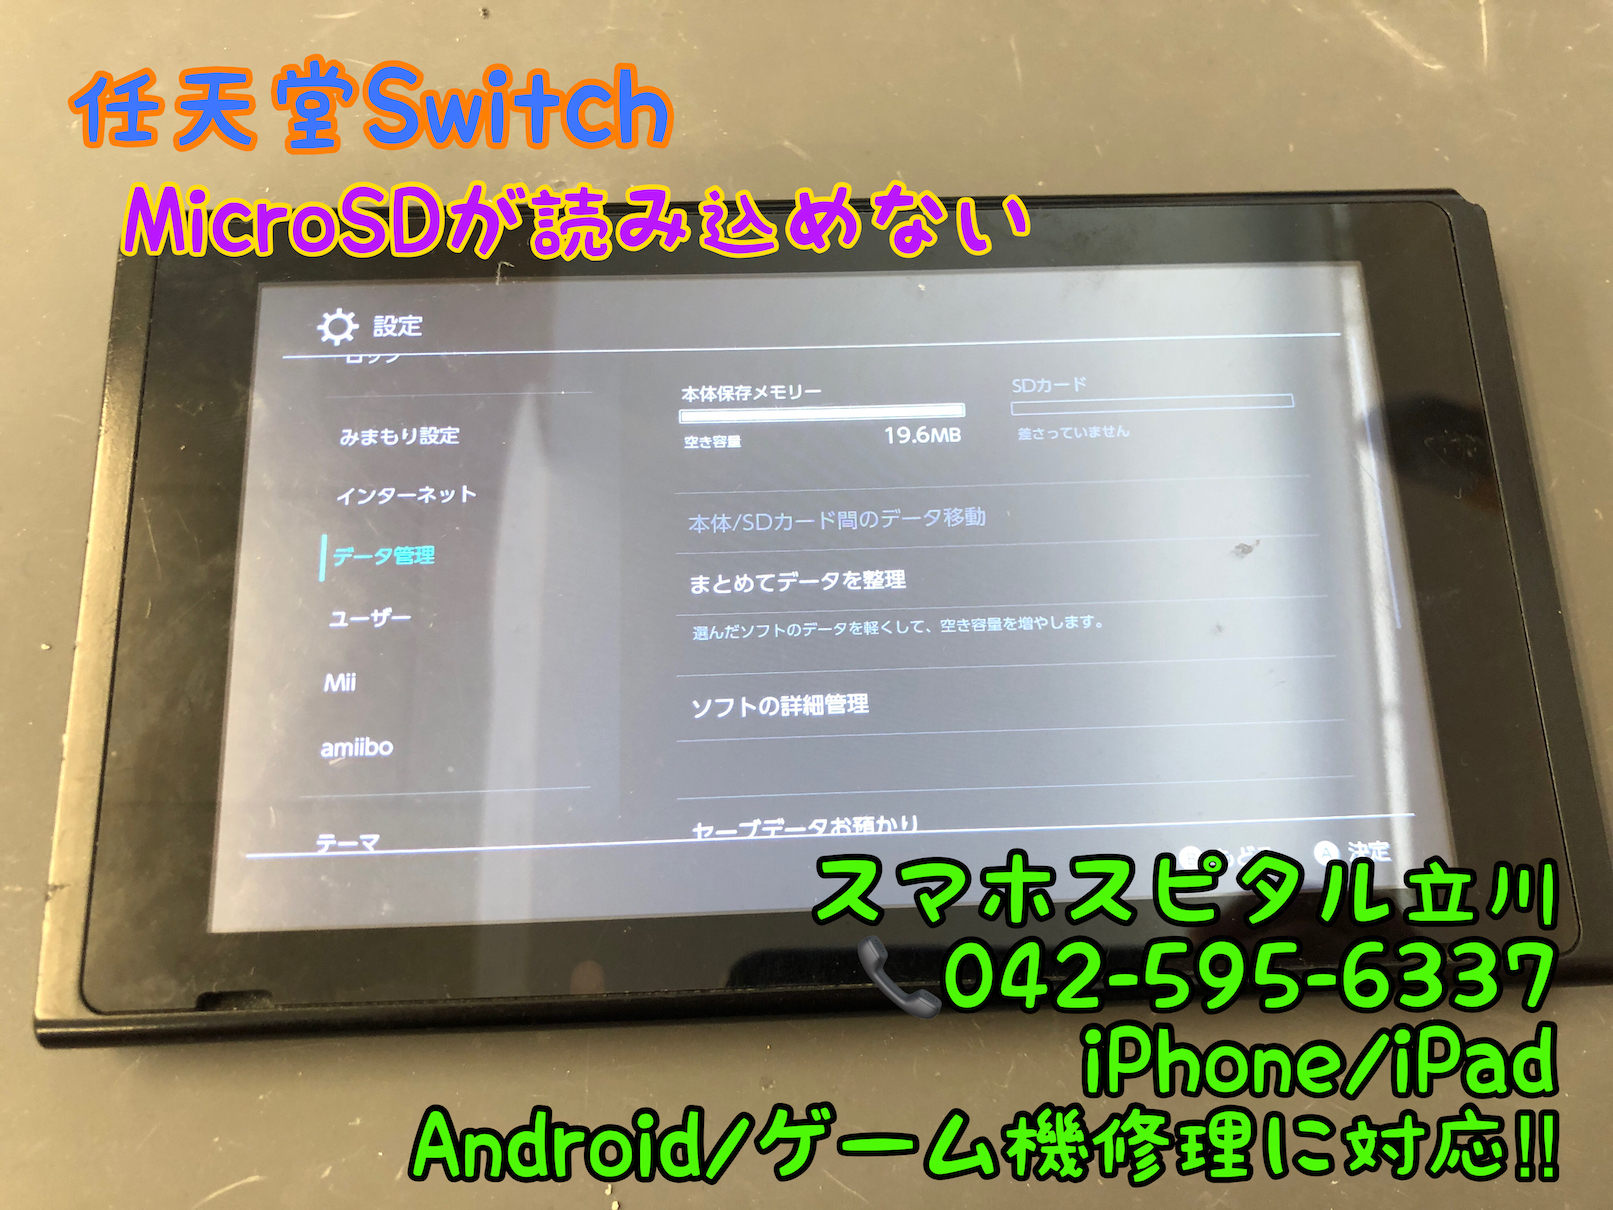 Nintendo Switch】microSDを入れても読み込み出来ない！ 中古で買った 